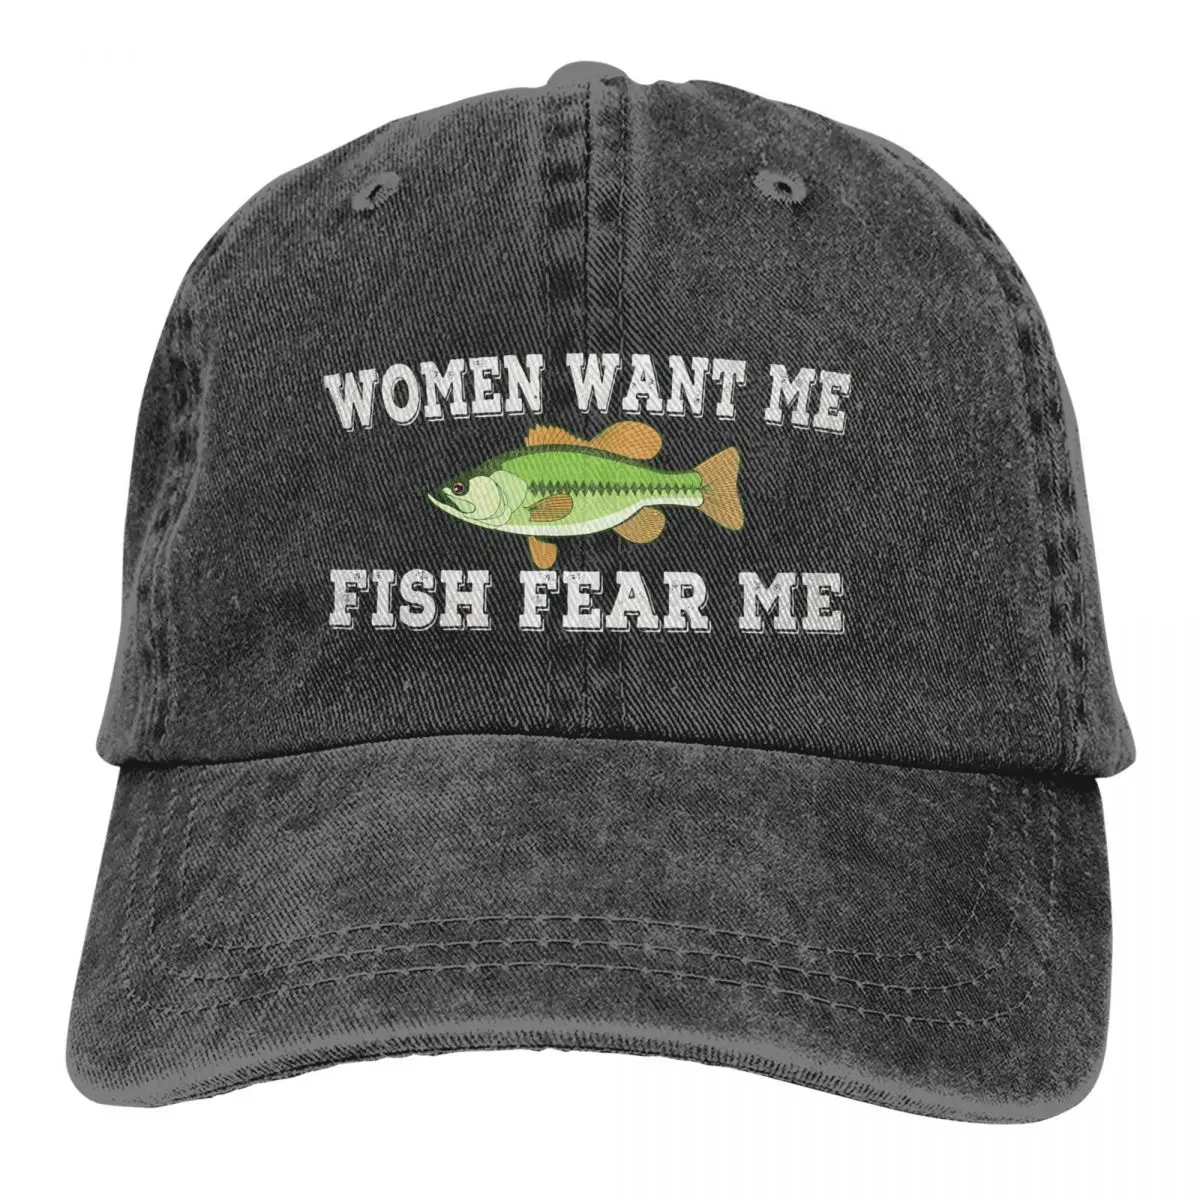 

Women Want Me Fish Fear Me Women Love Me Fish Fear Me Fishing Dad Quotes Sarcastic Jokes Baseball Caps Peaked Cap Meme Hats